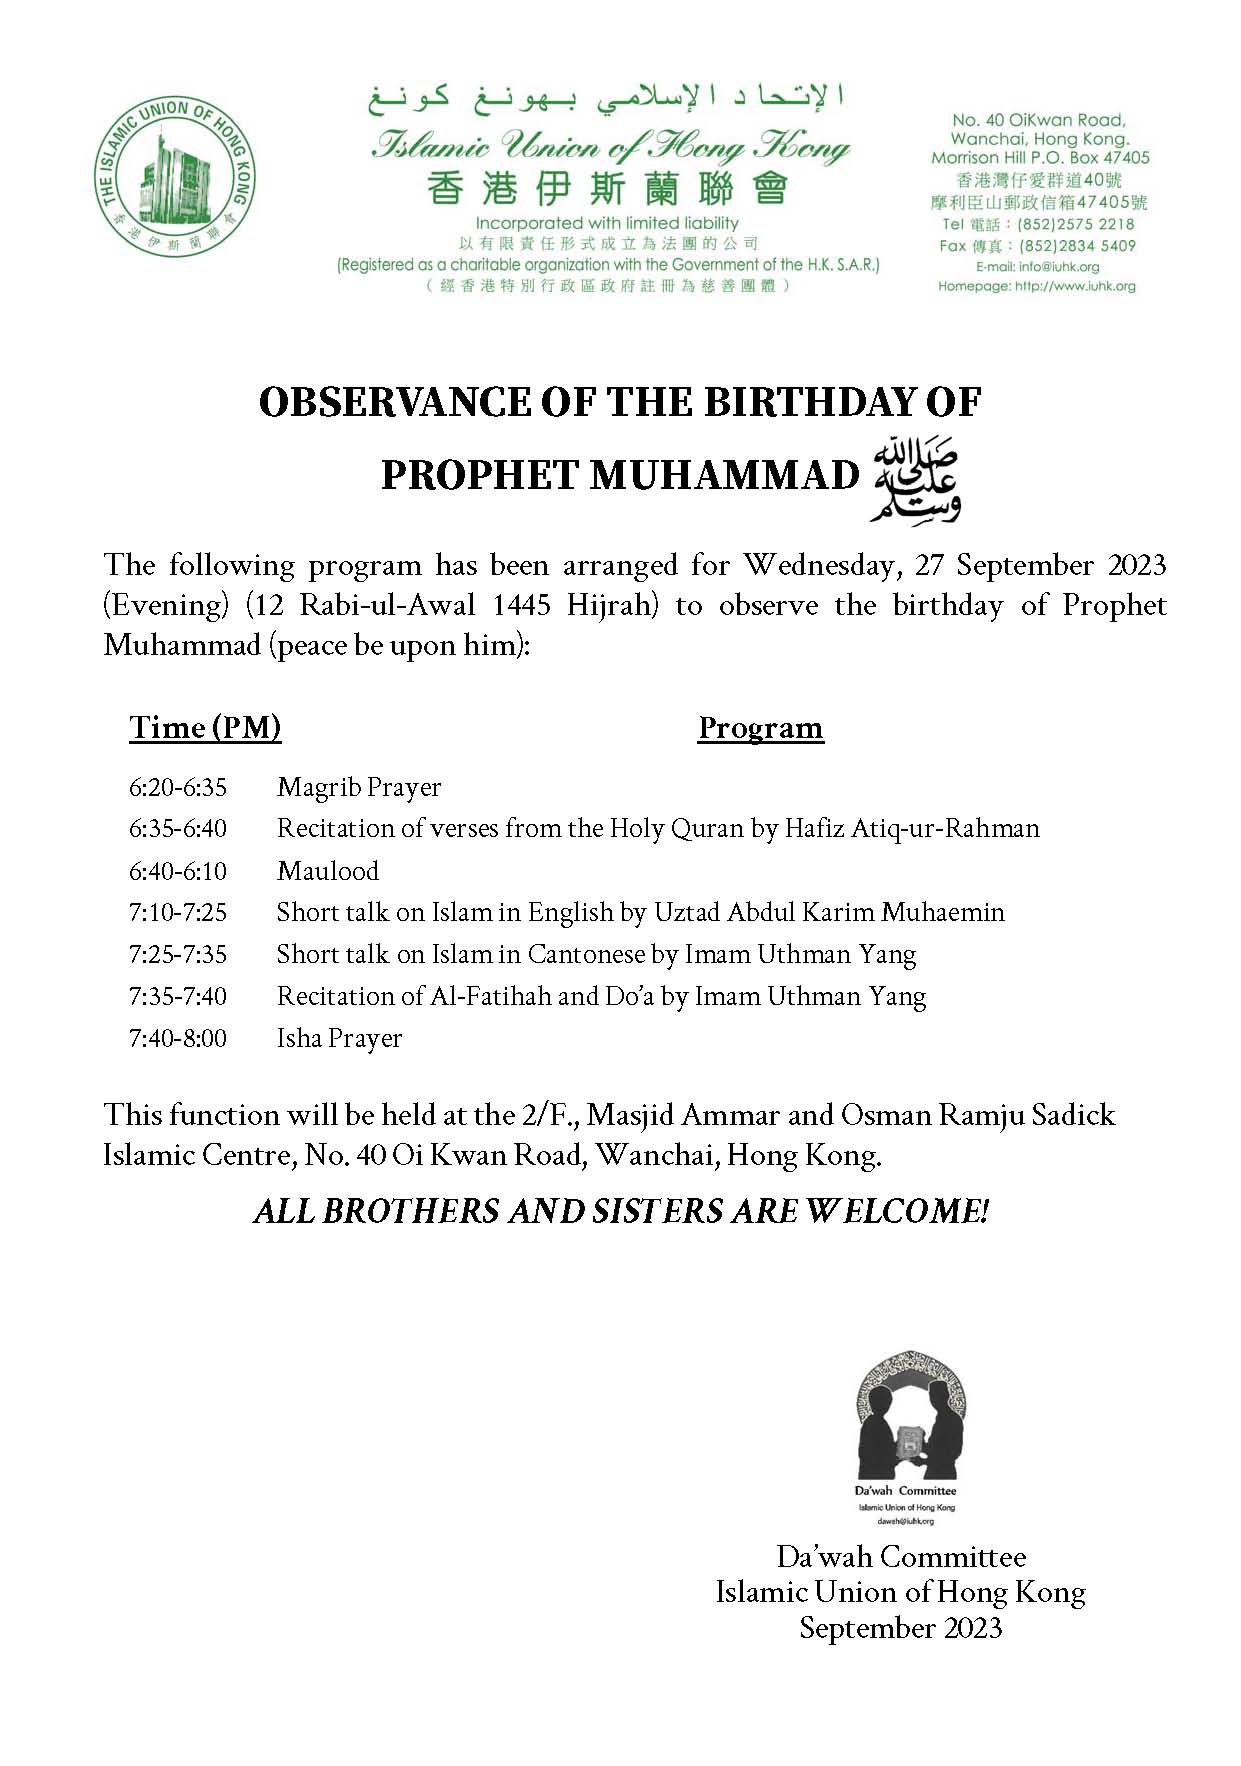 Observance of the Birthday of Prophet Muhammad